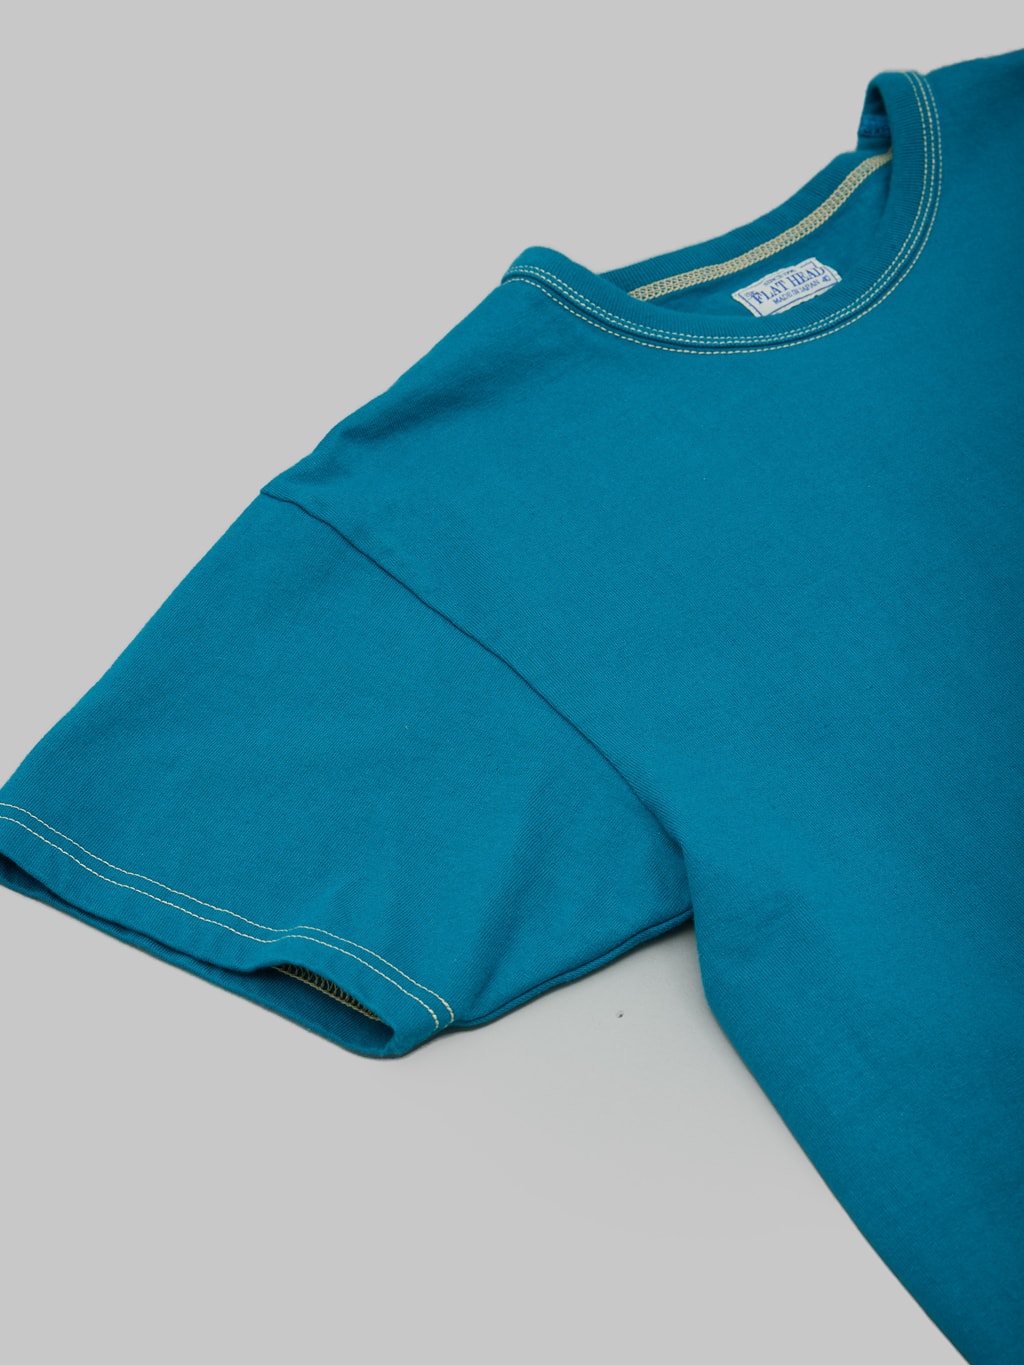 The Flat Head Plain Heavyweight TShirt turquoise no side seams